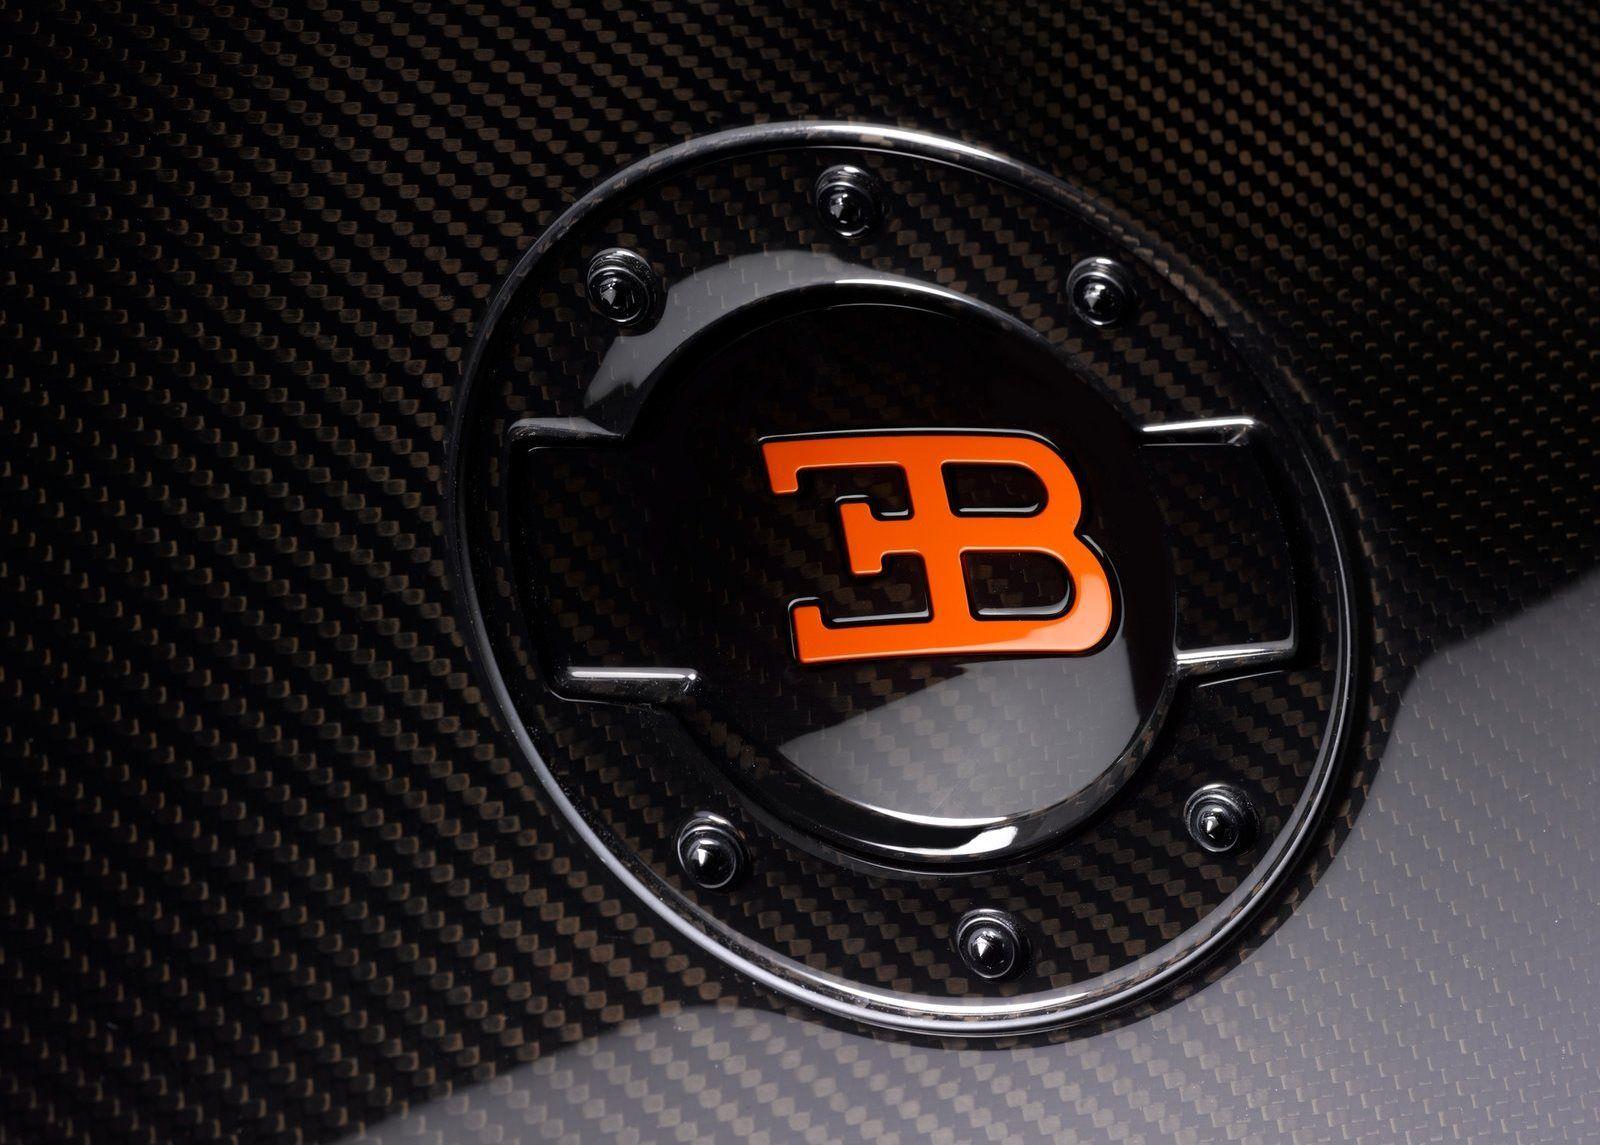 Buggati Logo - bugatti car logos - Google Search | Companys | Pinterest | Bugatti ...